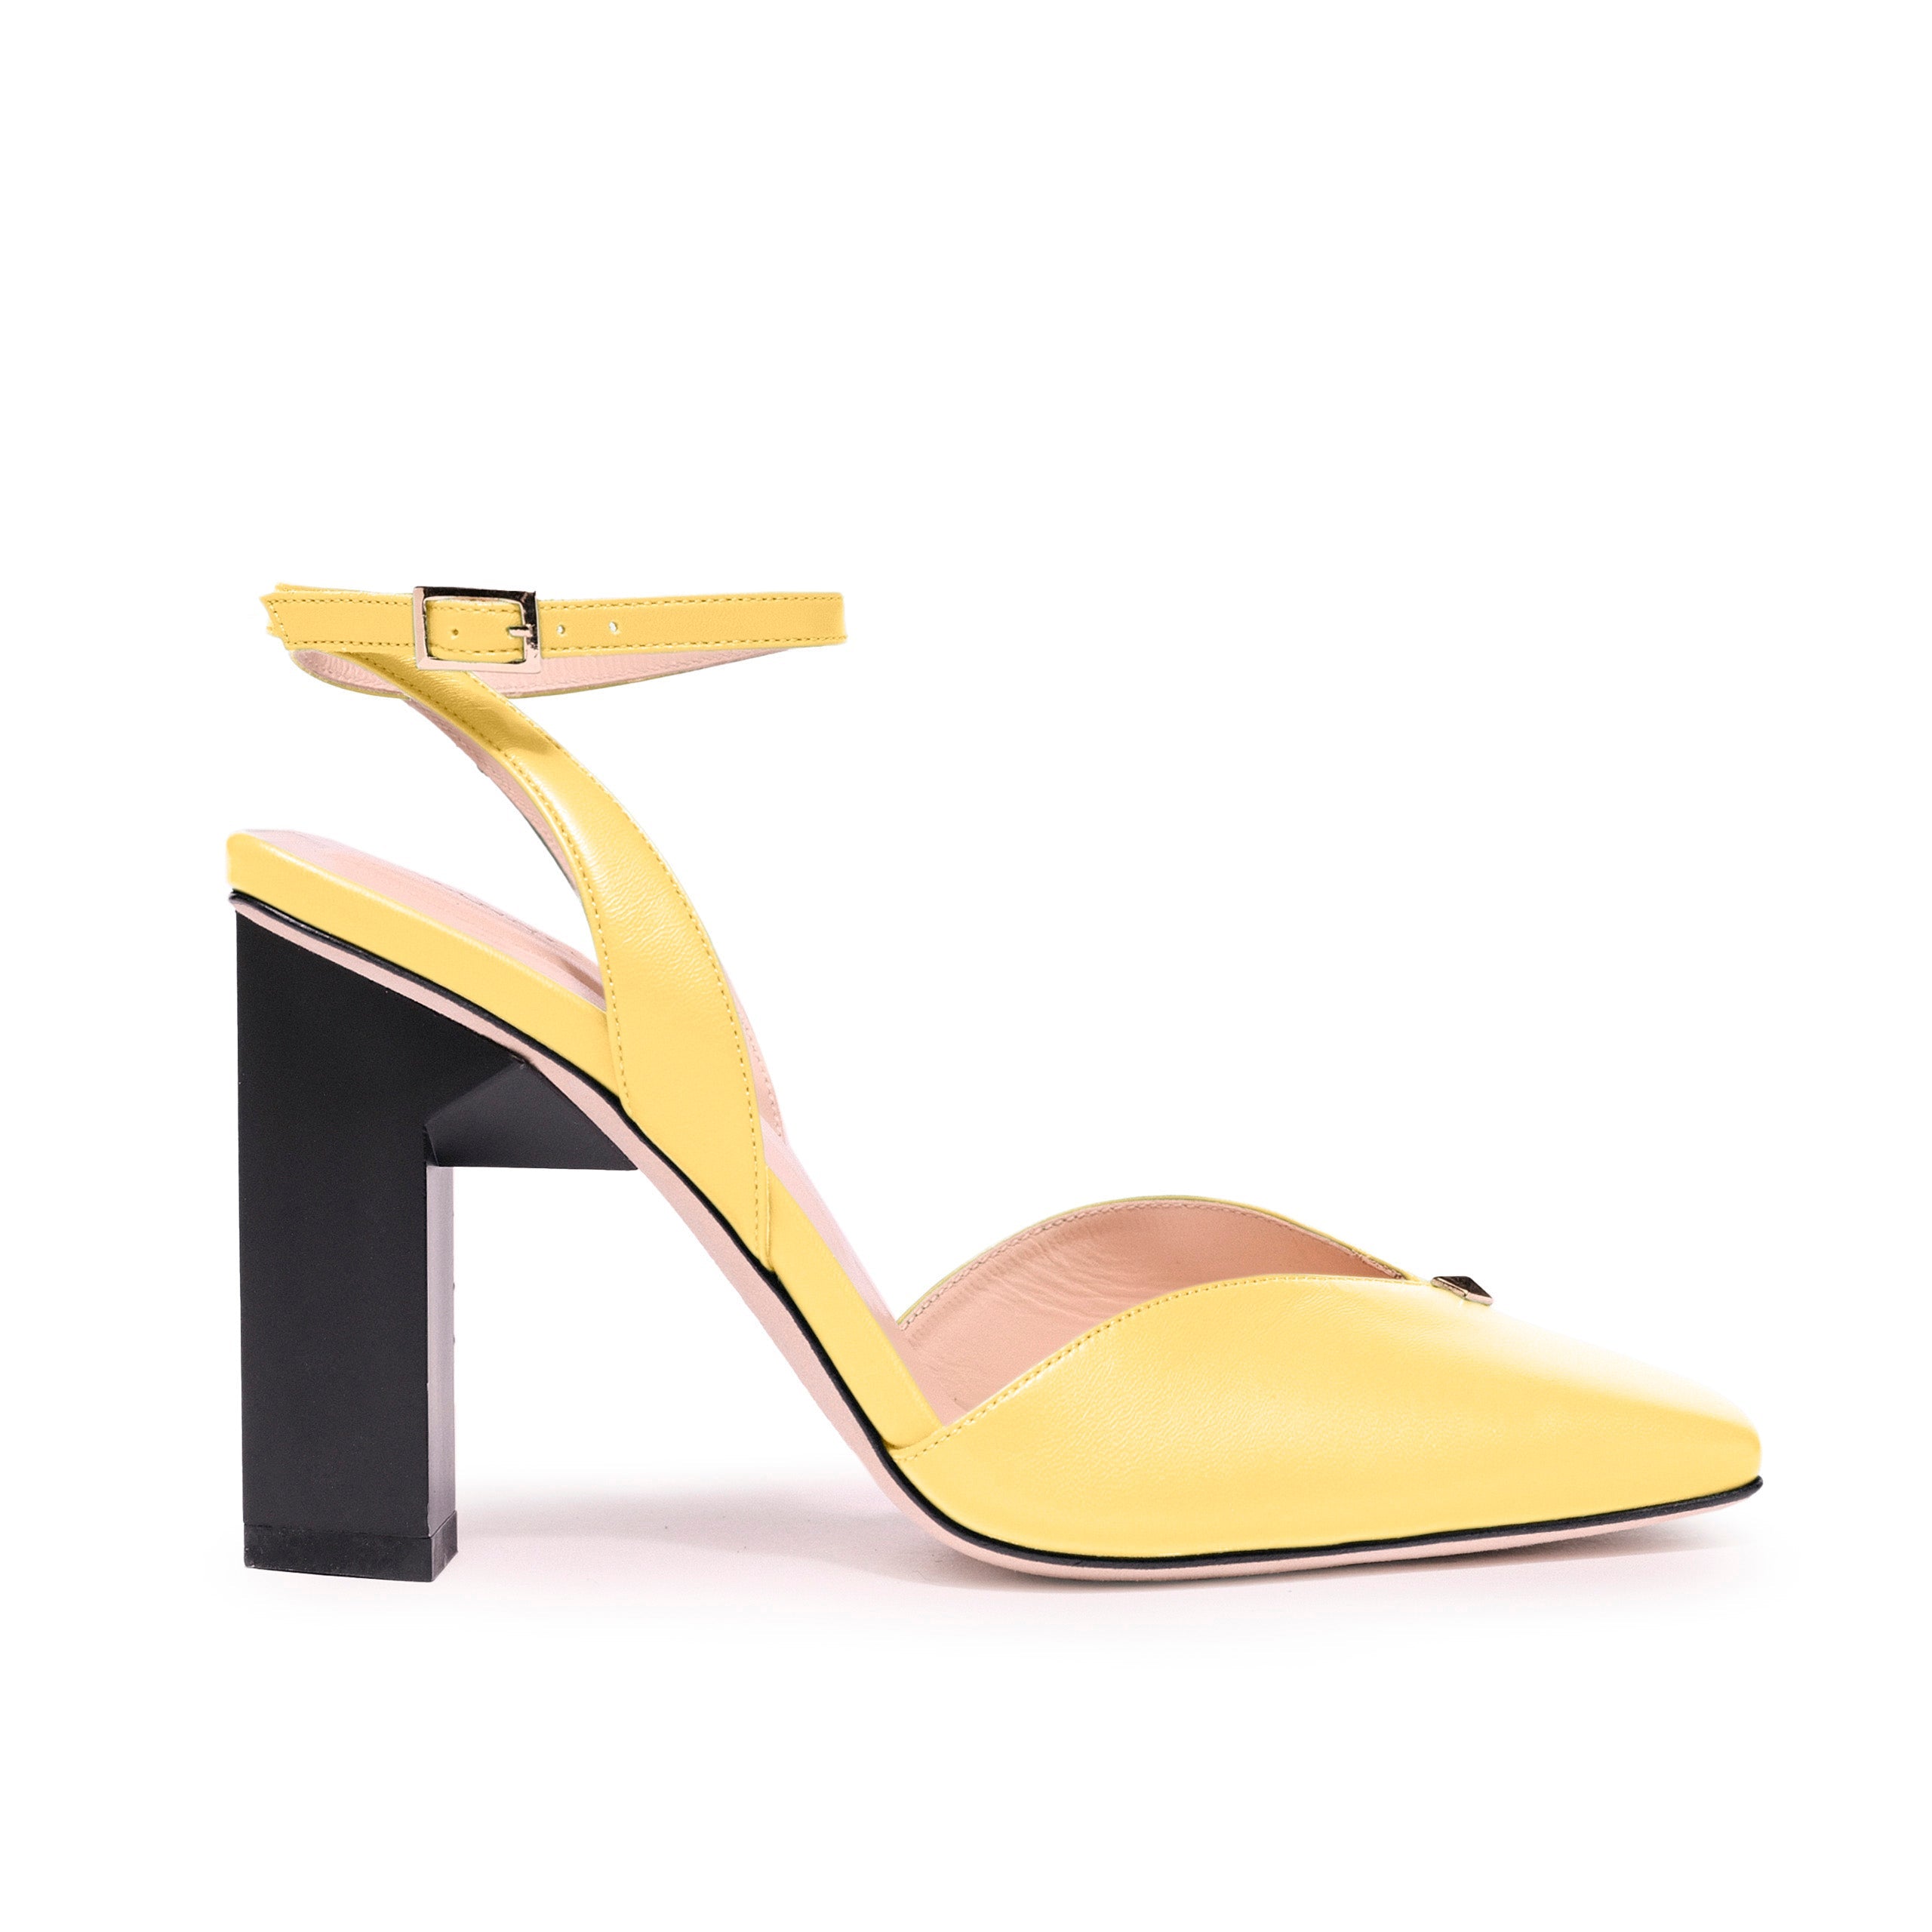 Mustard Yellow Sandals With Heel | Shoes | Fashion heels, Heels, Trending  shoes